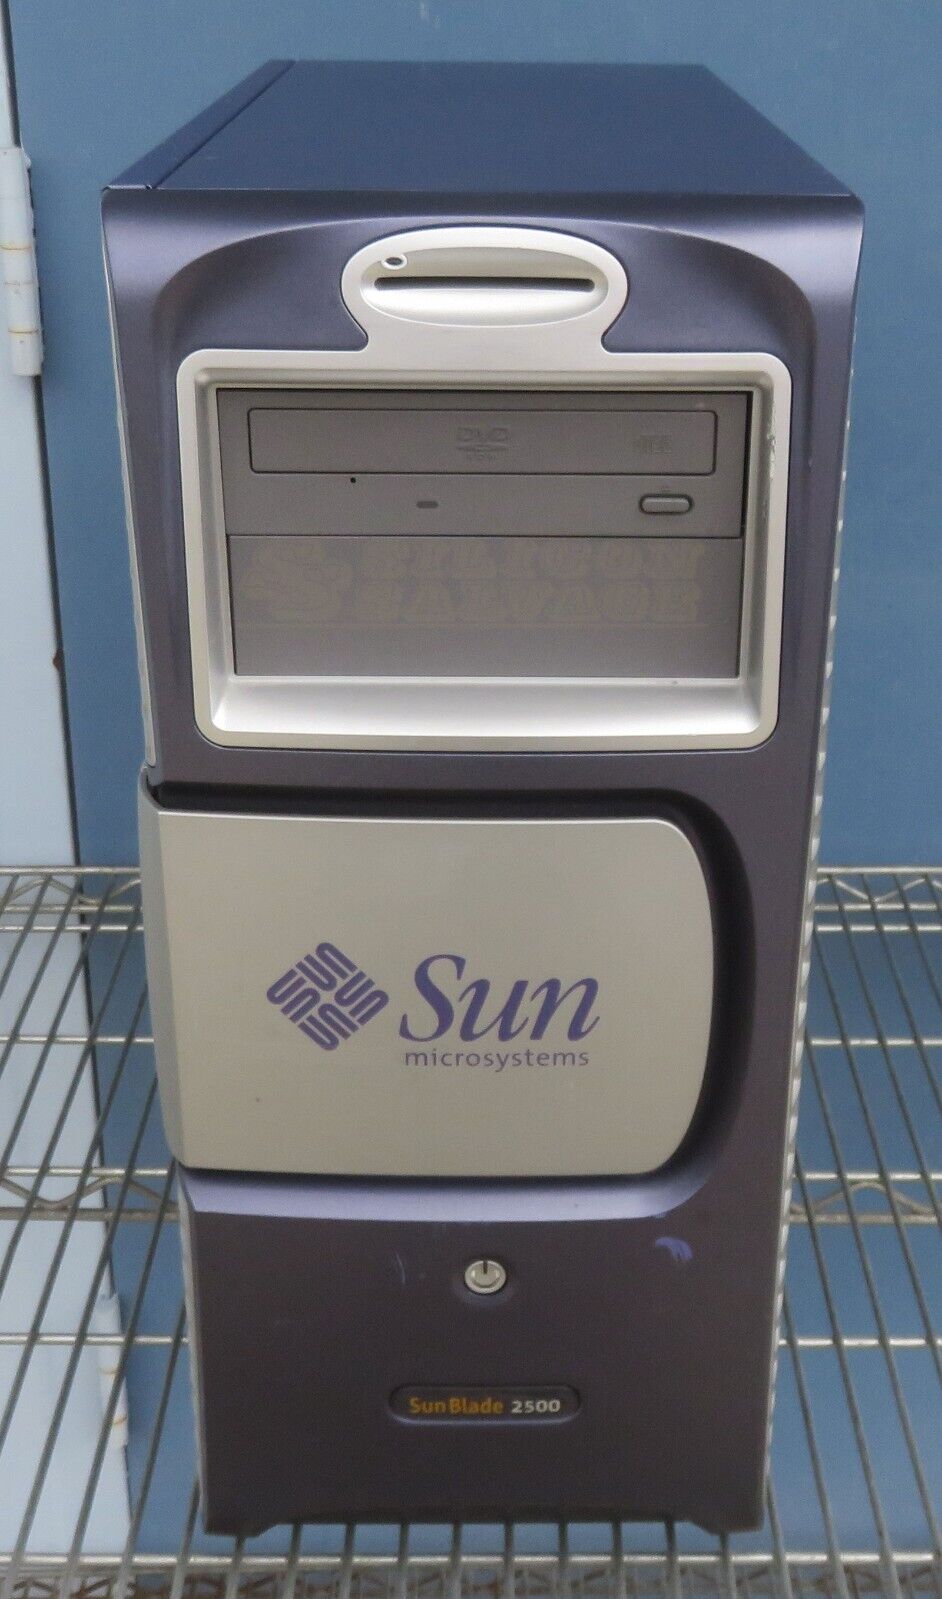 Sun Microsystems Sunblade 2500 Silver Workstation 2 x 1.6GHz XVR-600 **No HDD**